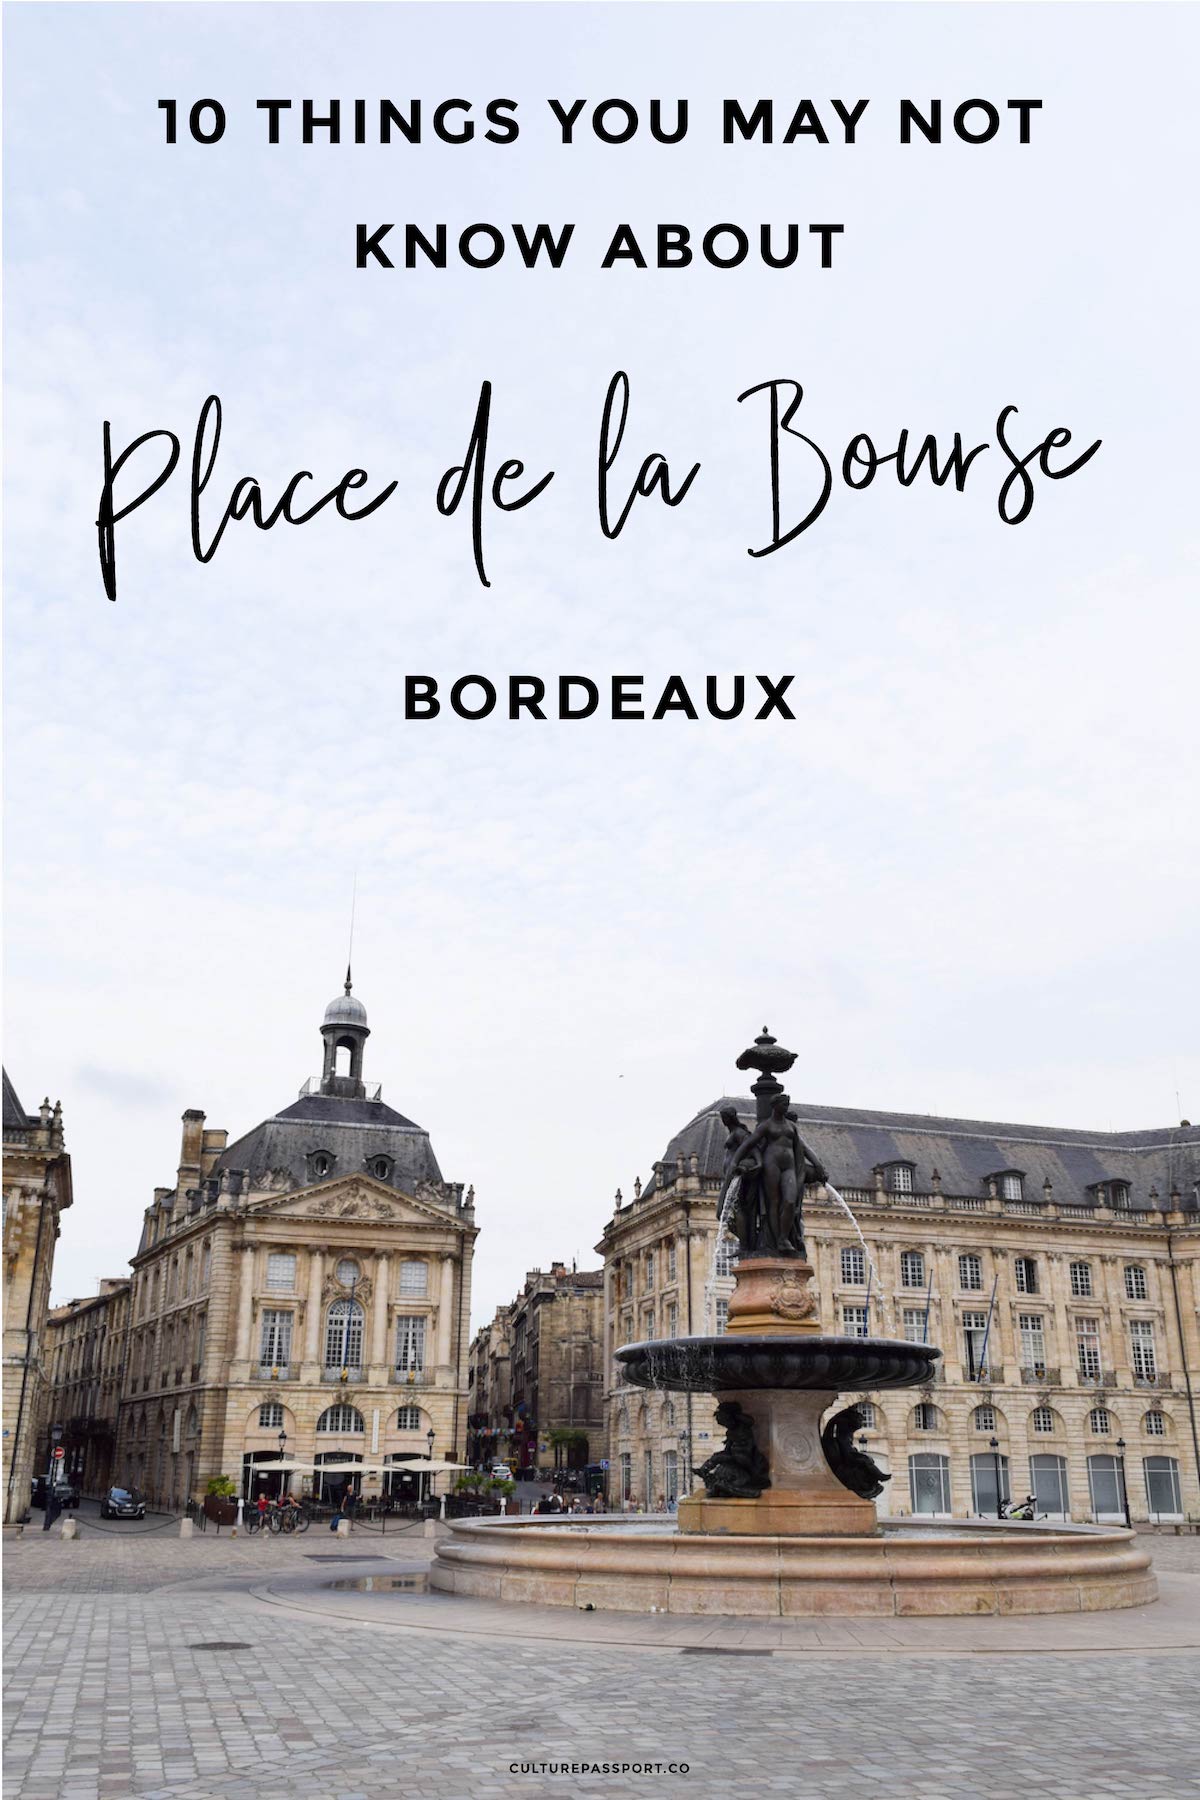 Things You May Not Know About Place de la Bourse Bordeaux